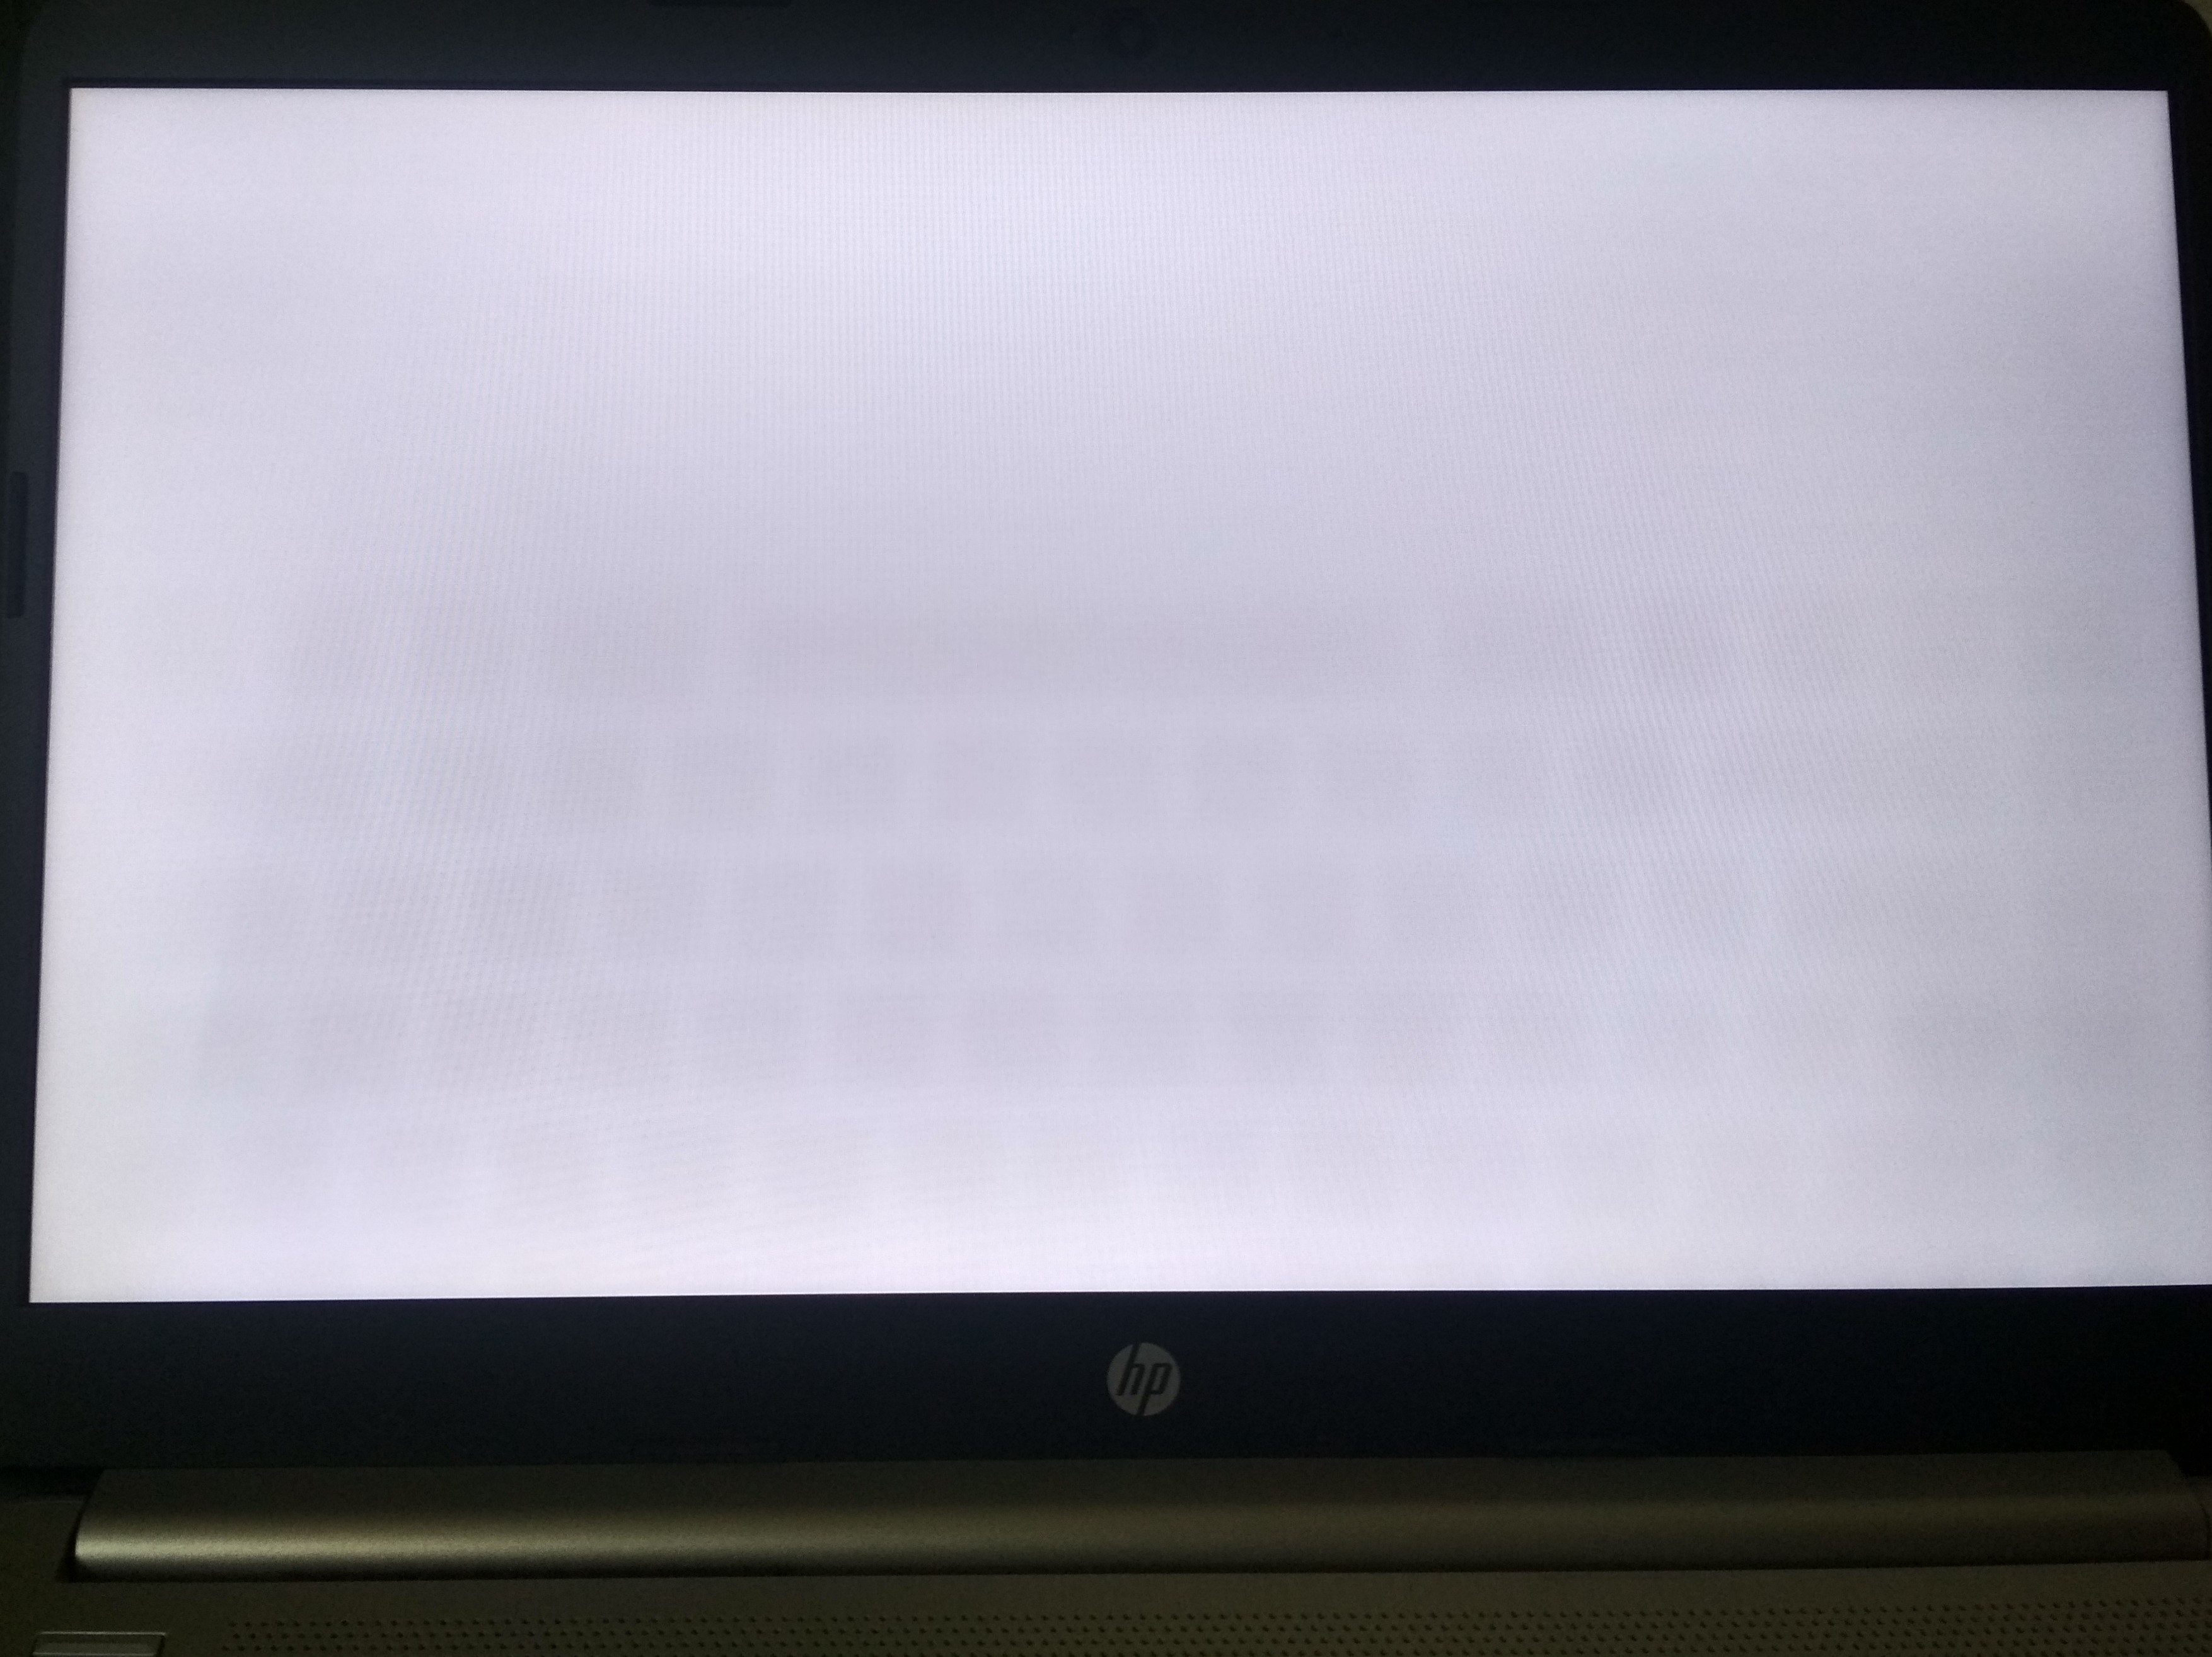 Solved: Keyboards marks visible over light background - HP Support